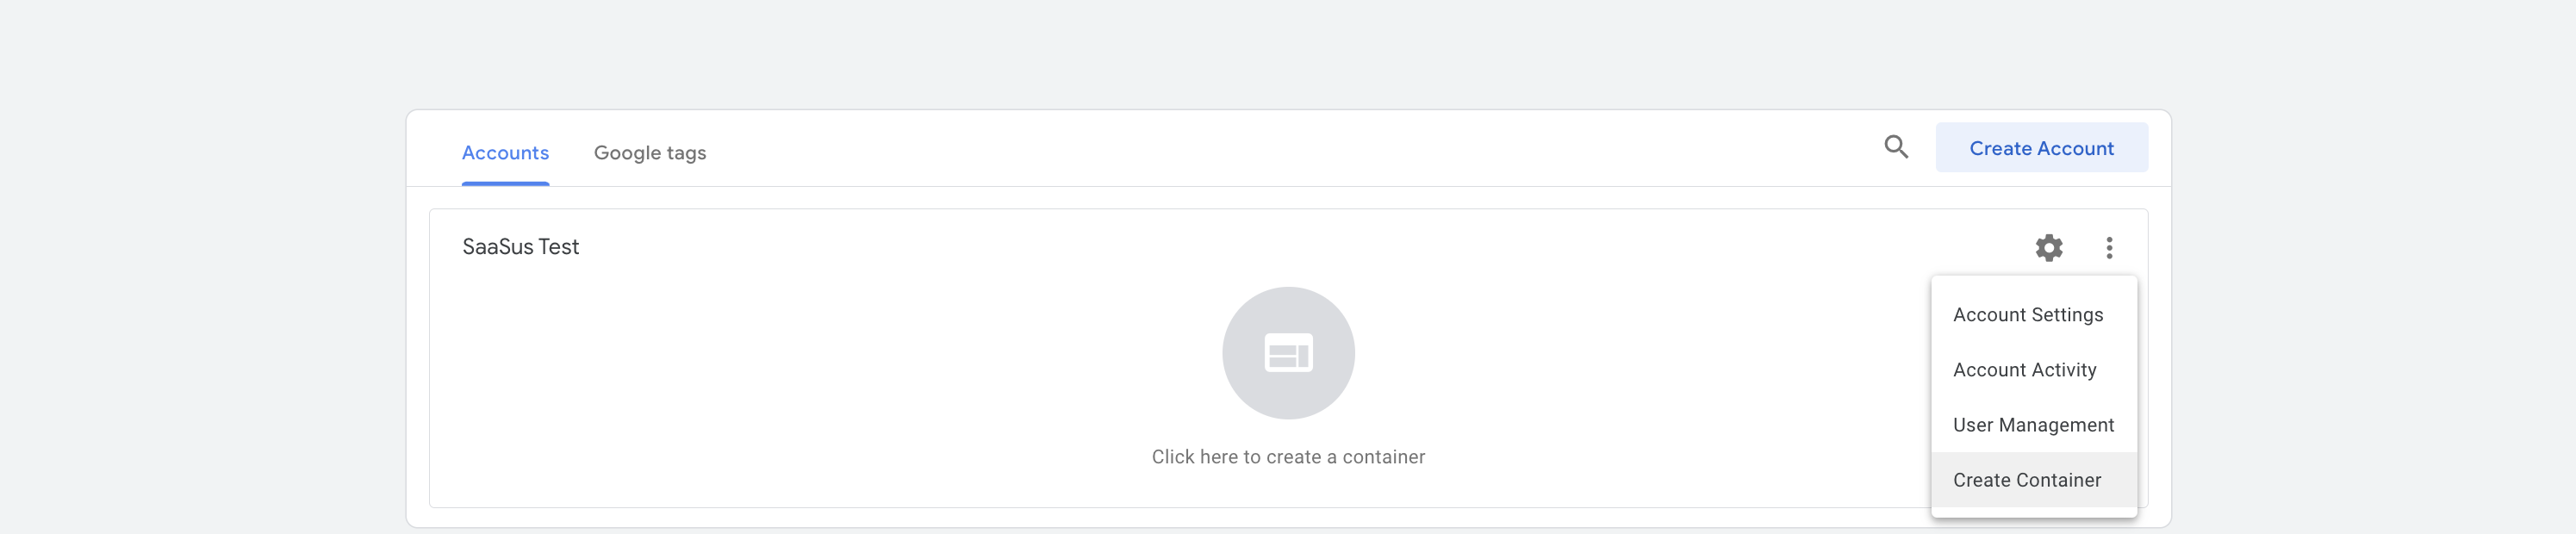 googletagmanagercreateaccountandcontainer-3